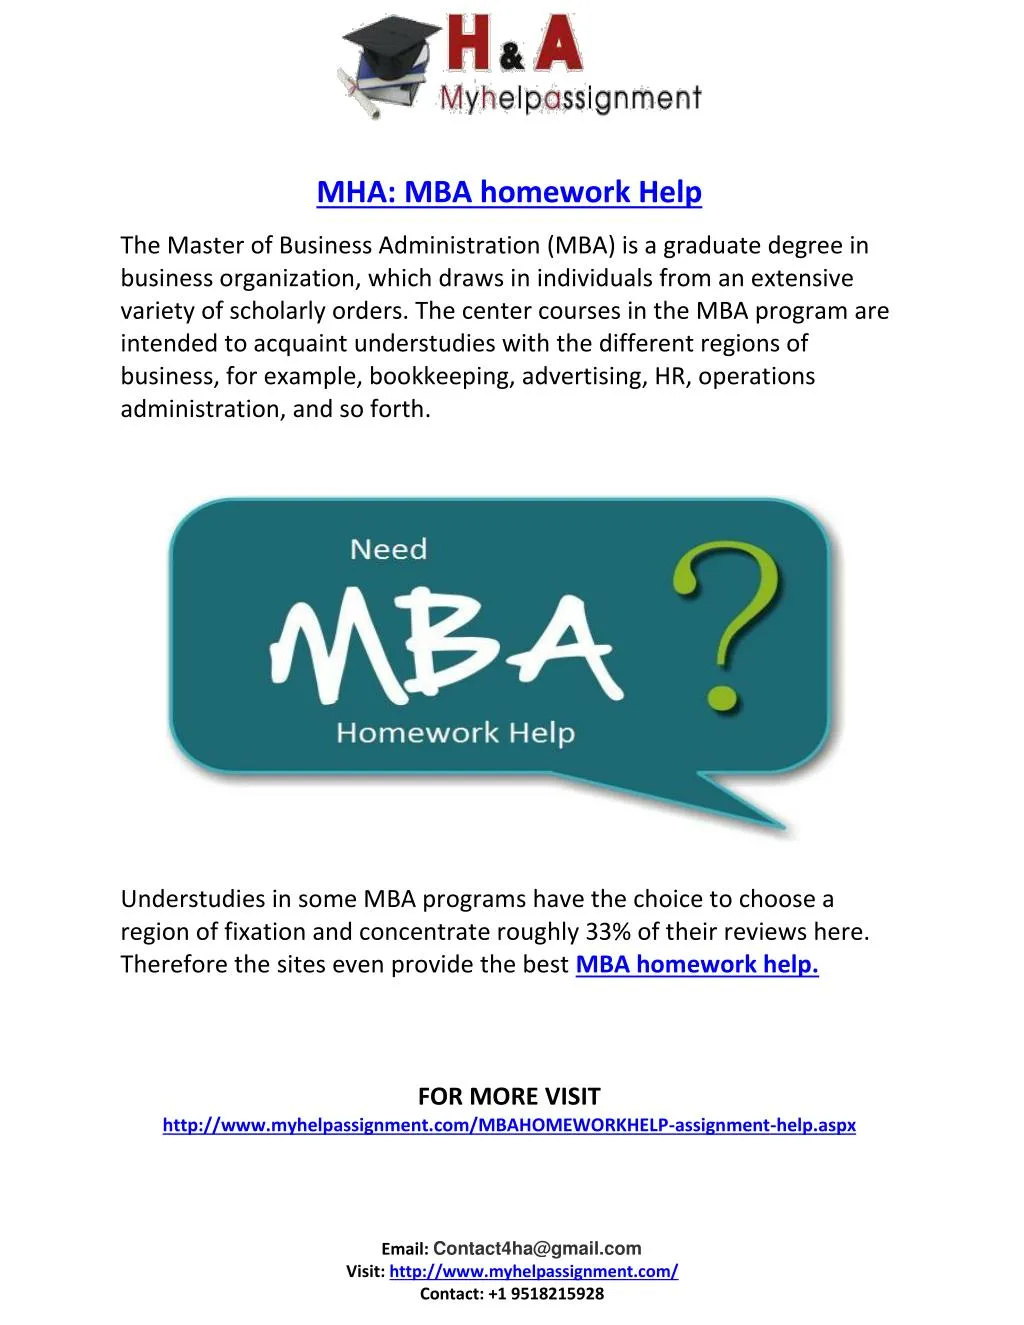 Mba homework help